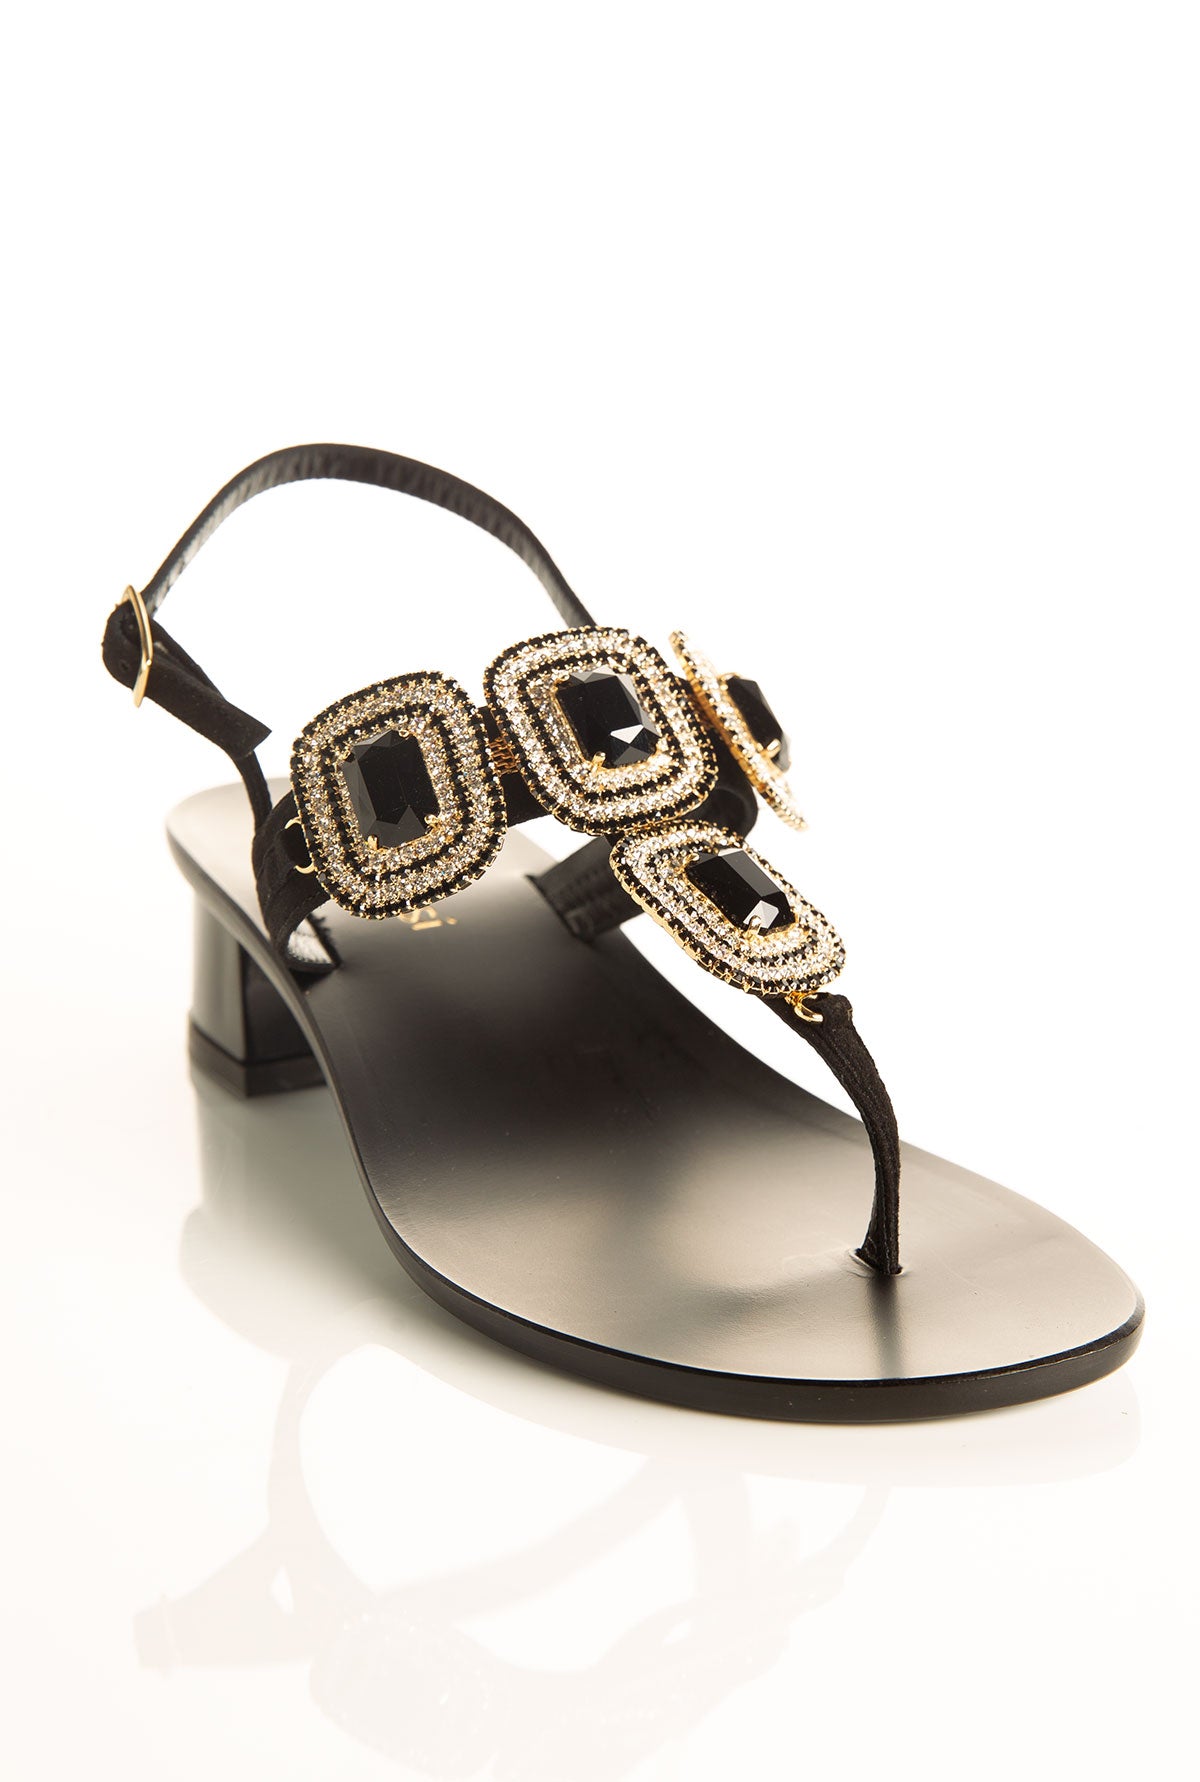 lack jewel sandals, elegant black sandals, Swarovski stone sandals, comfortable heel sandals, Tuscan leather sandals, Capri Sandals